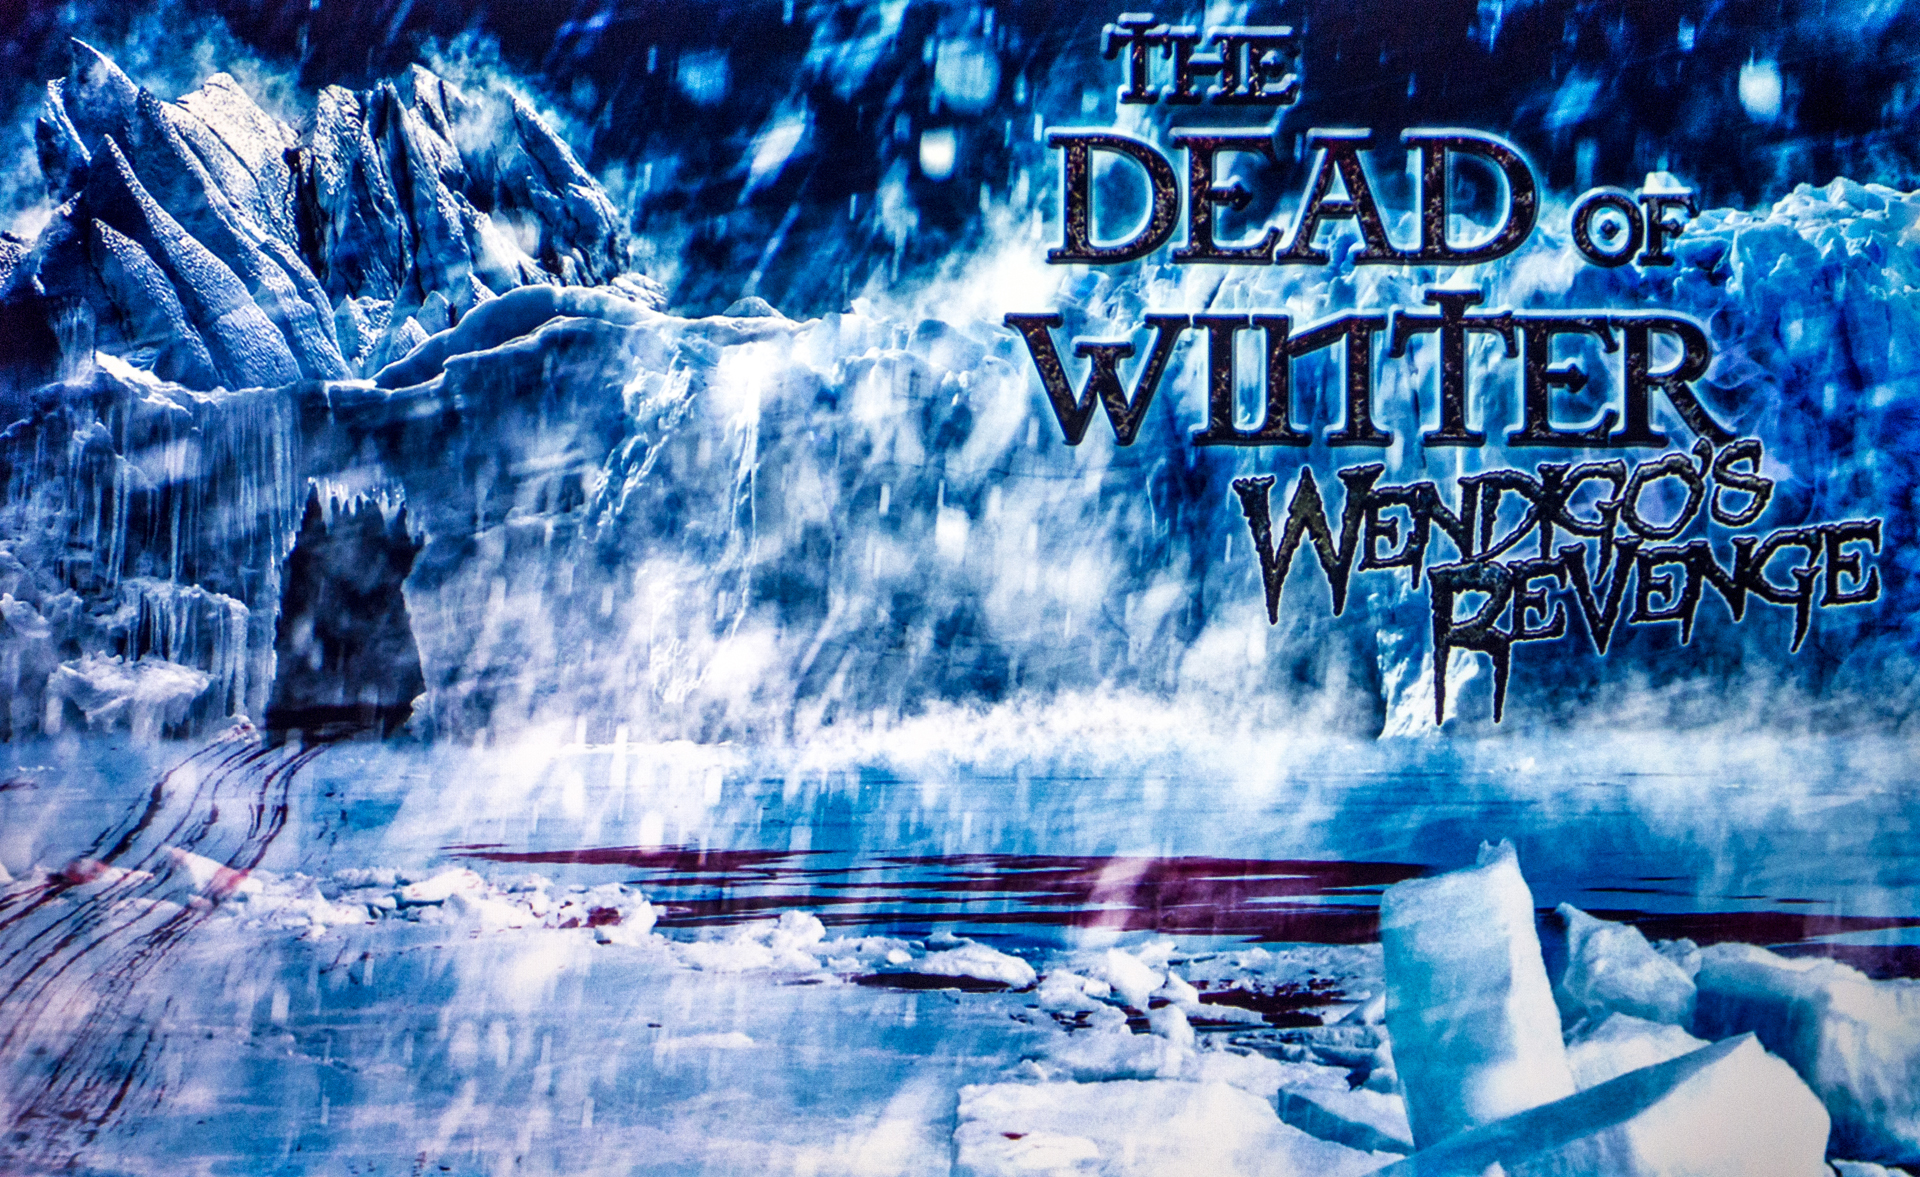  The Dead of Winter: Wendigo's Revenge (Image courtesy of Knott's Scary Farm) 